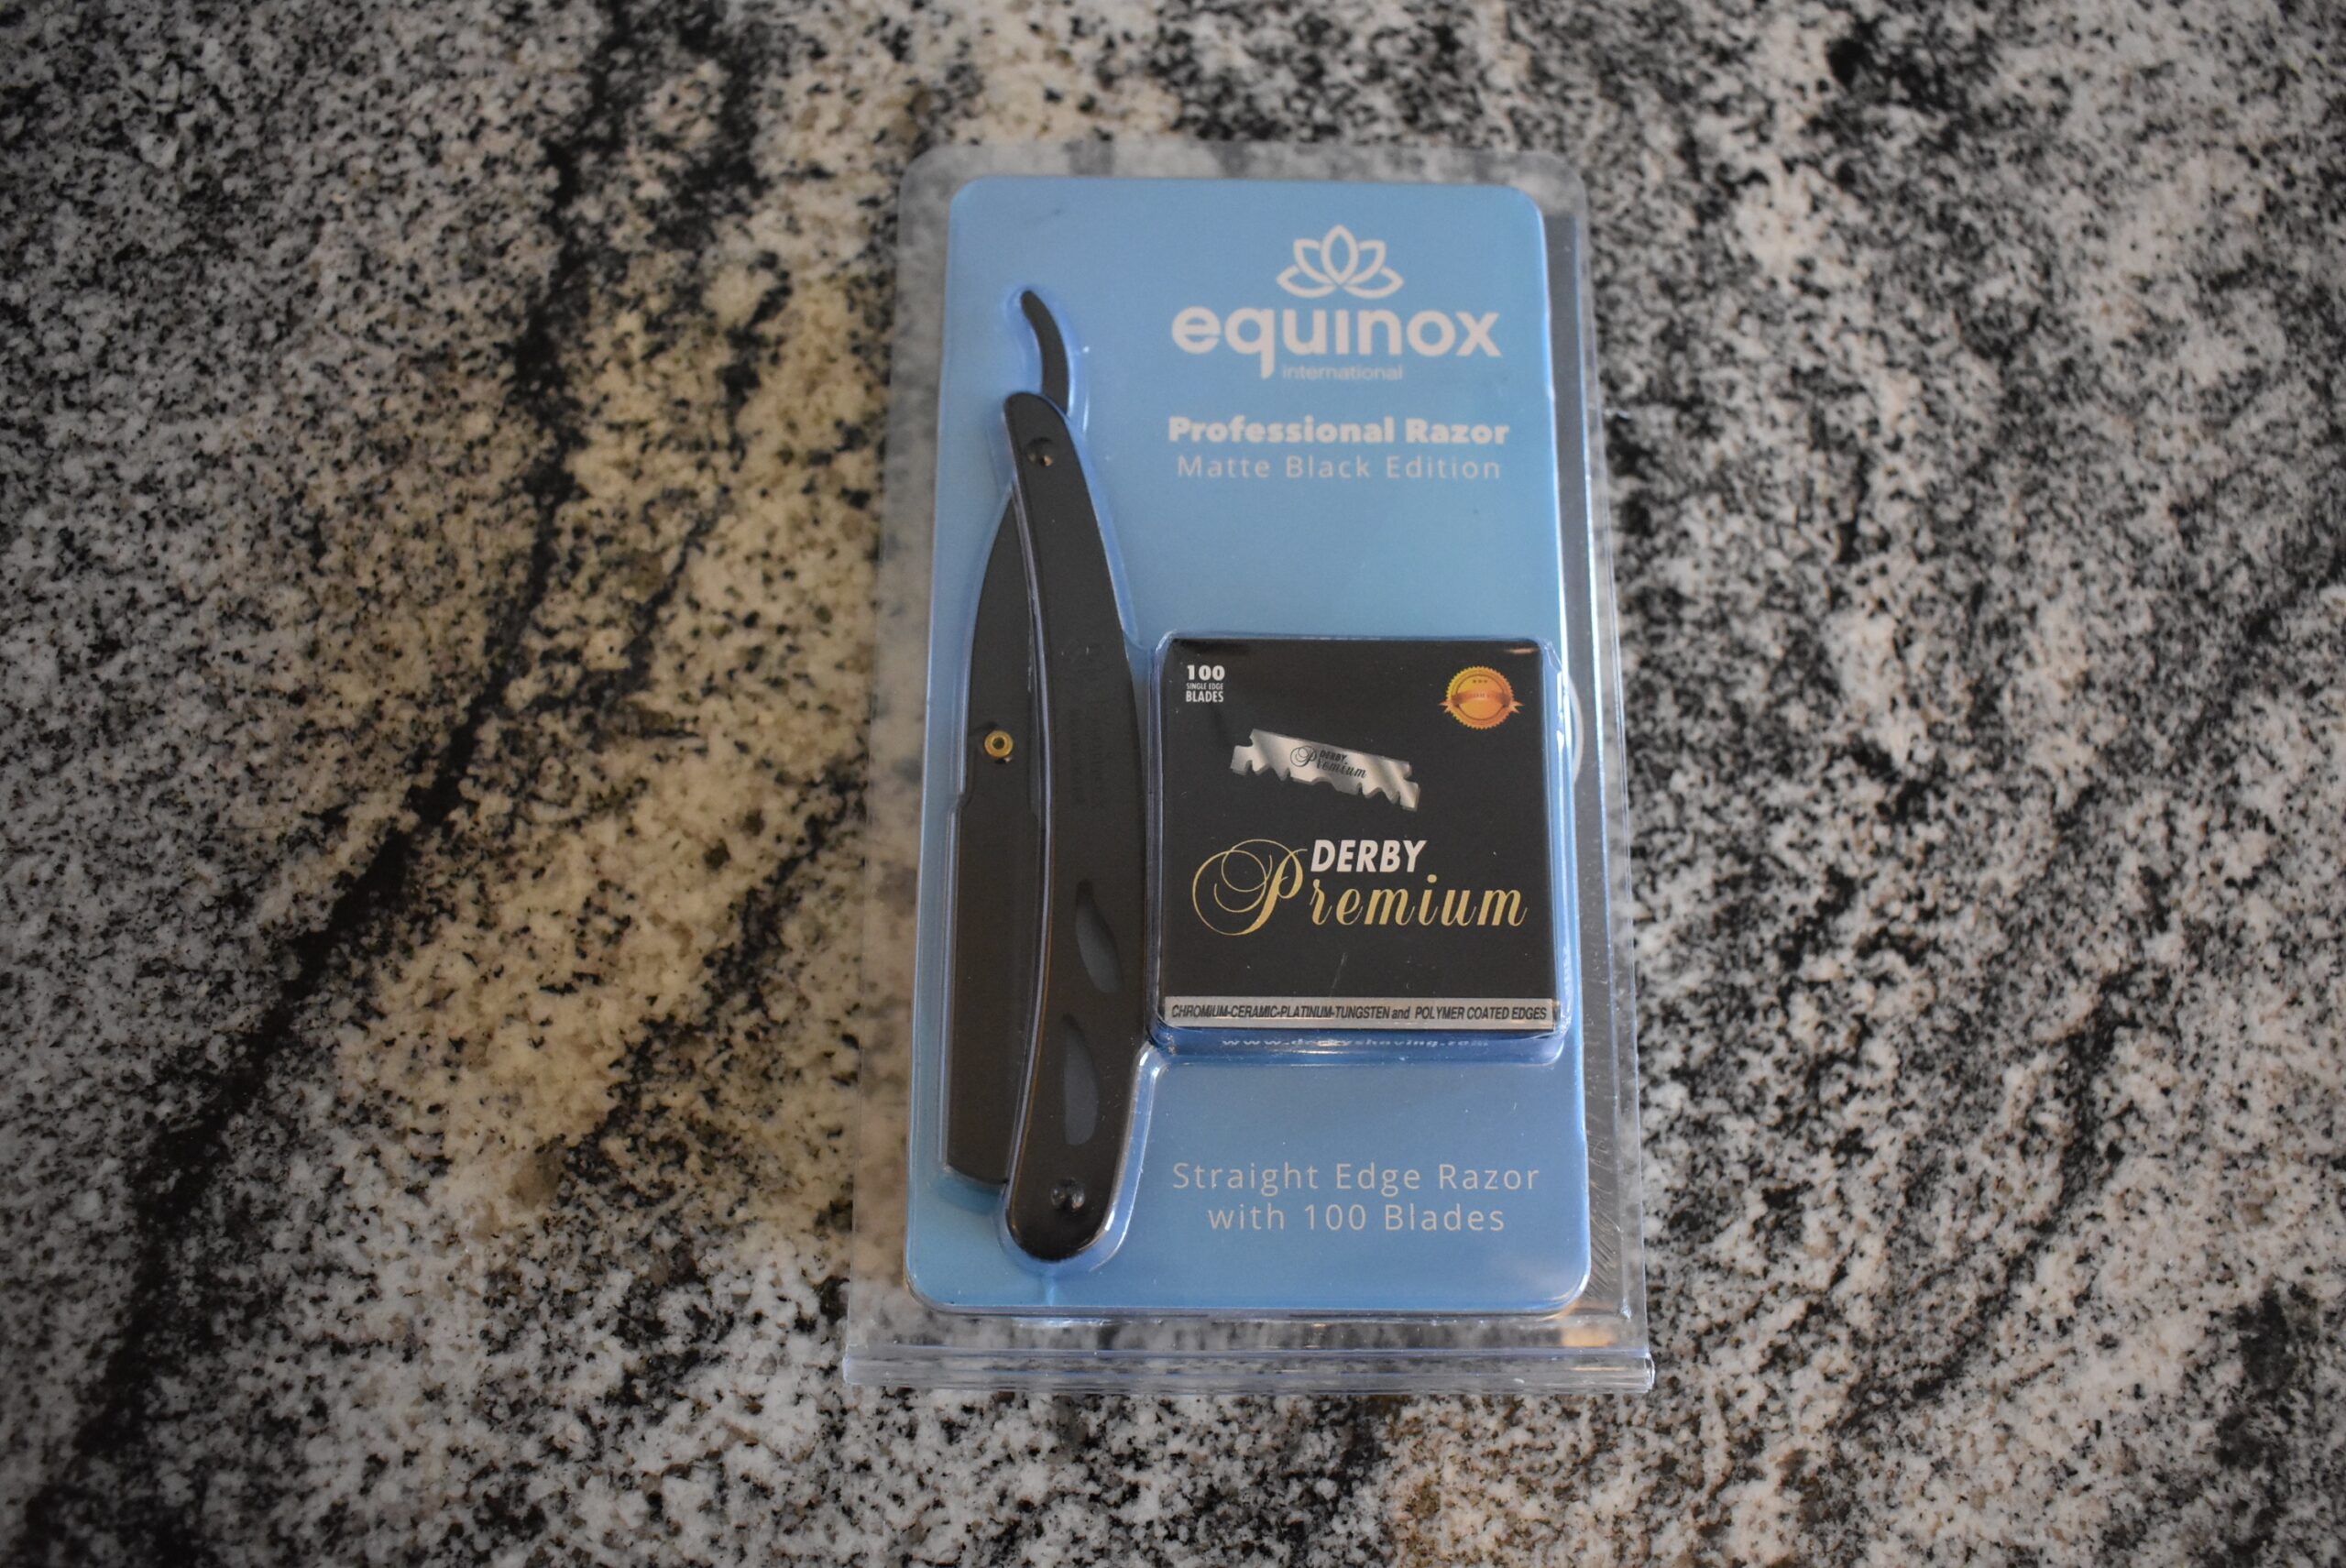 The Equinox professional straight razor